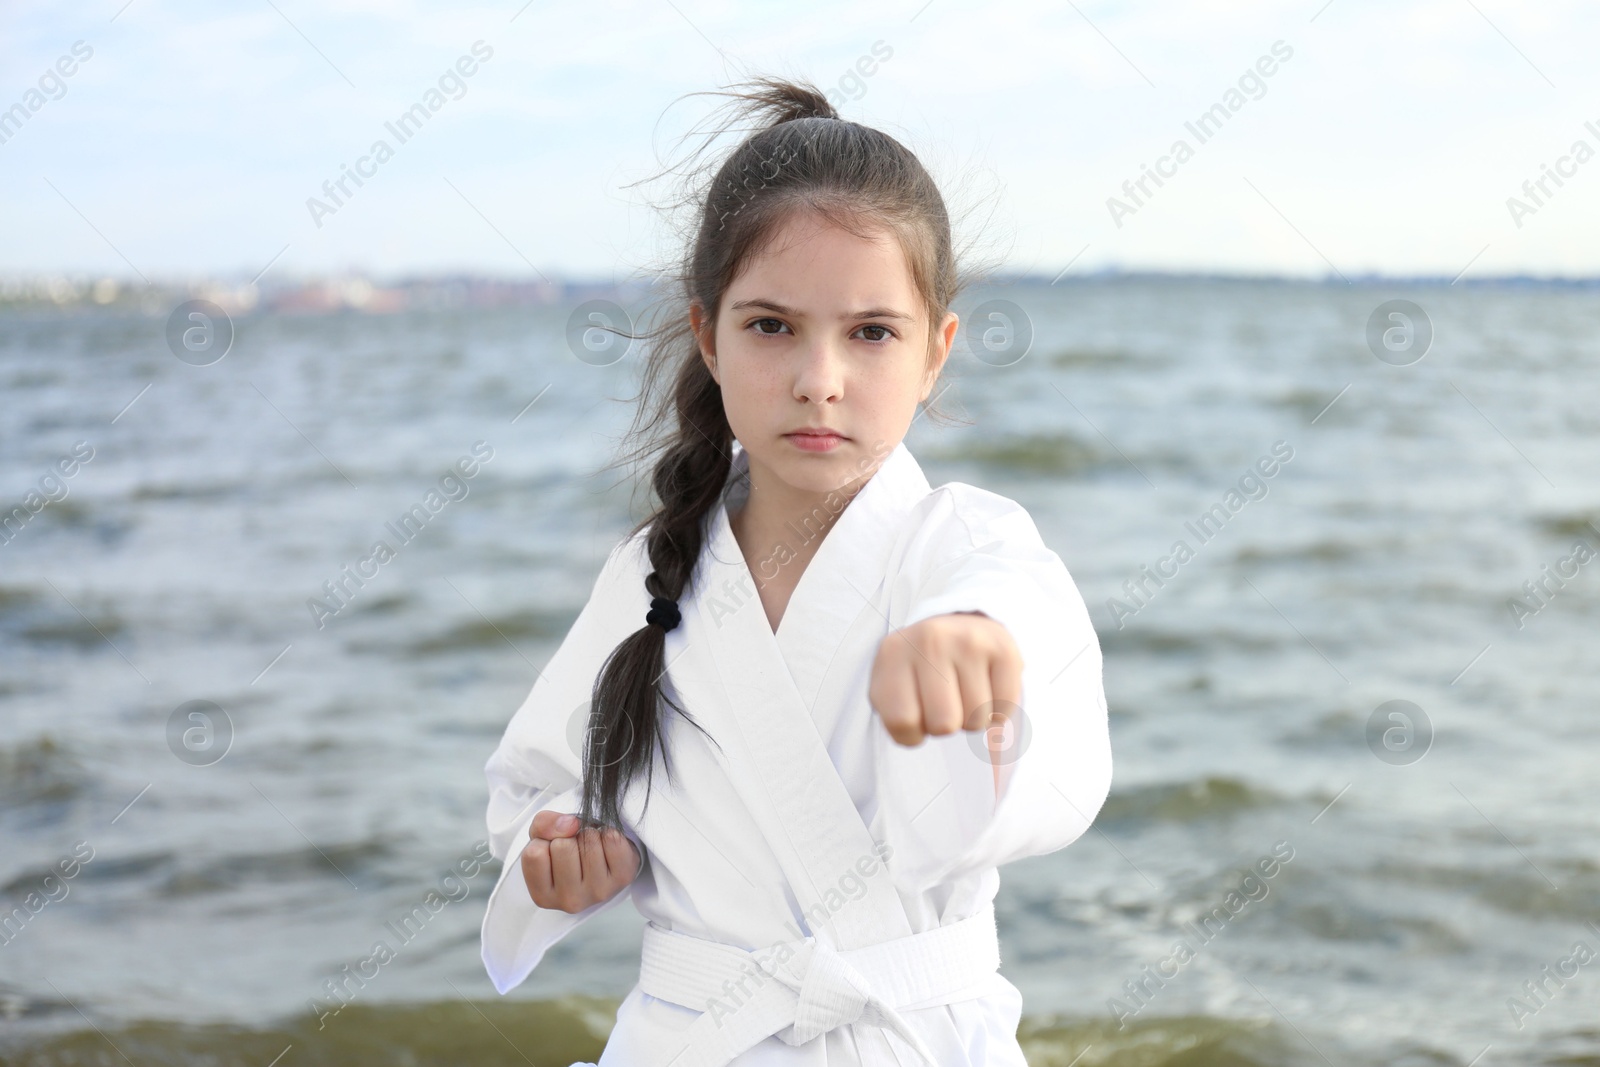 Photo of Cute little girl in kimono practicing karate near river